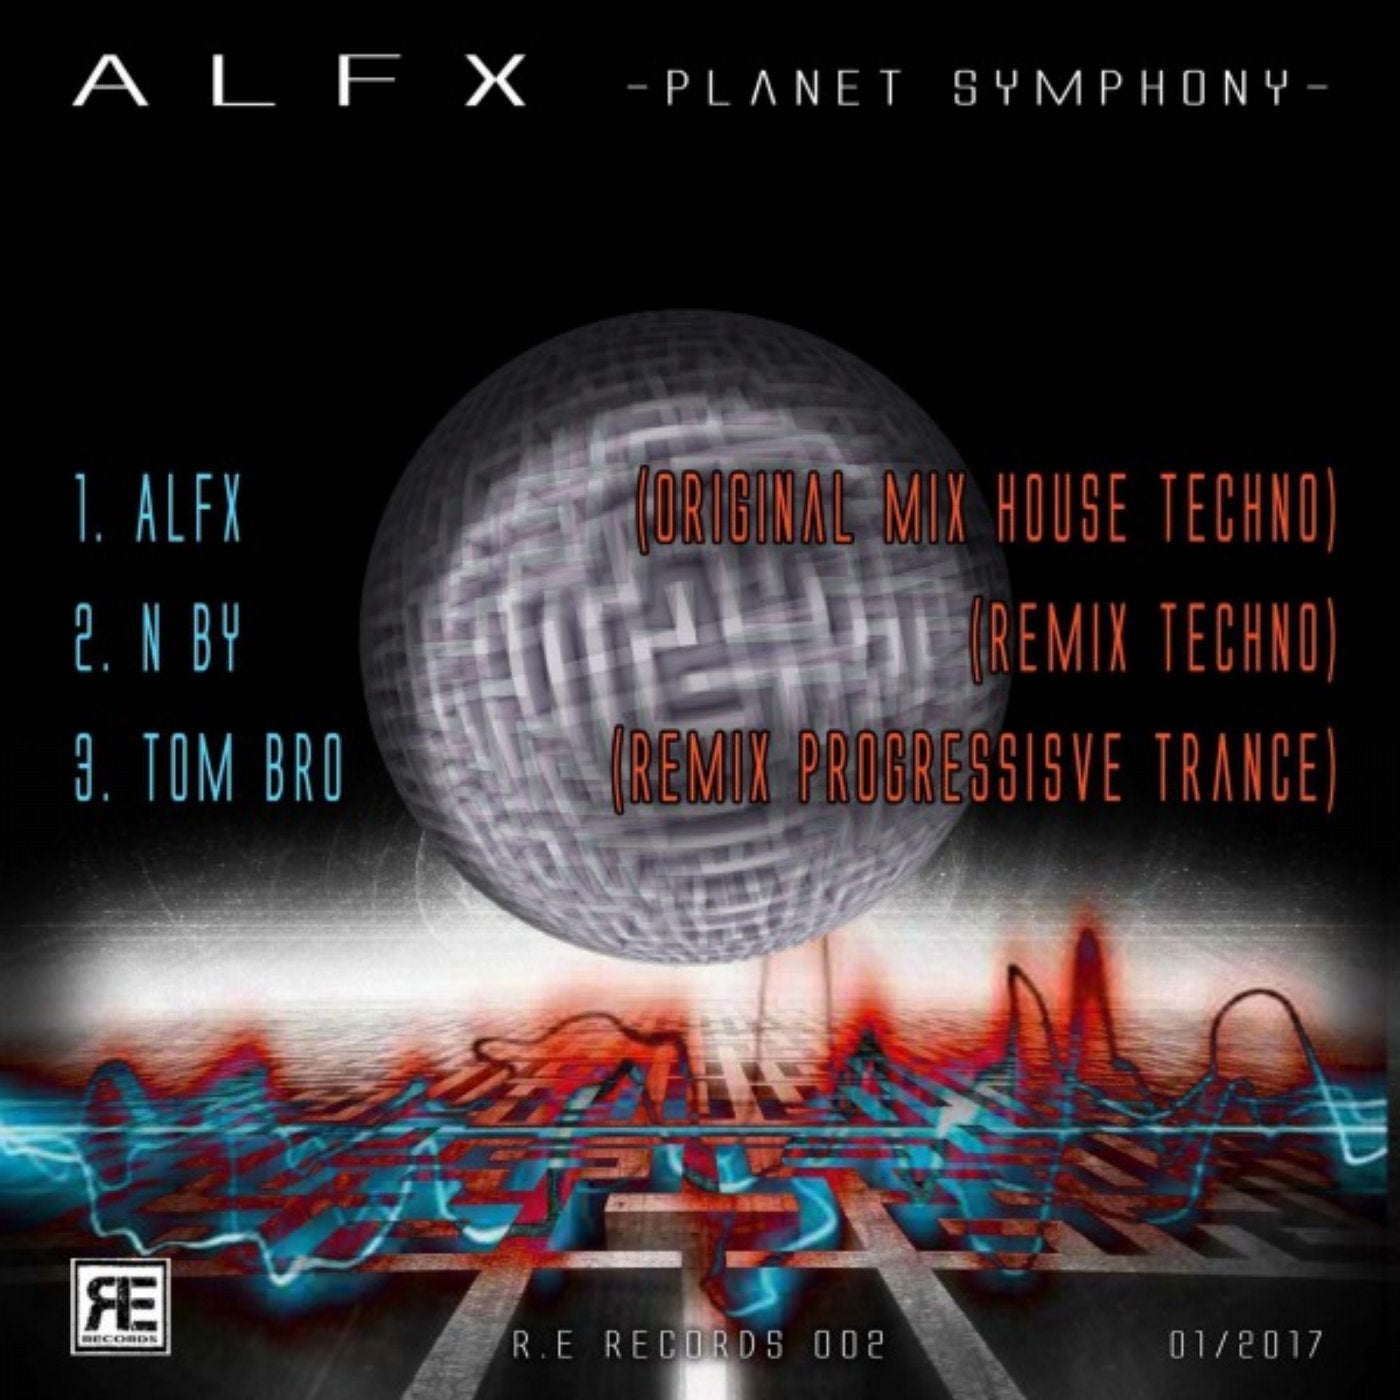 Planet Symphony